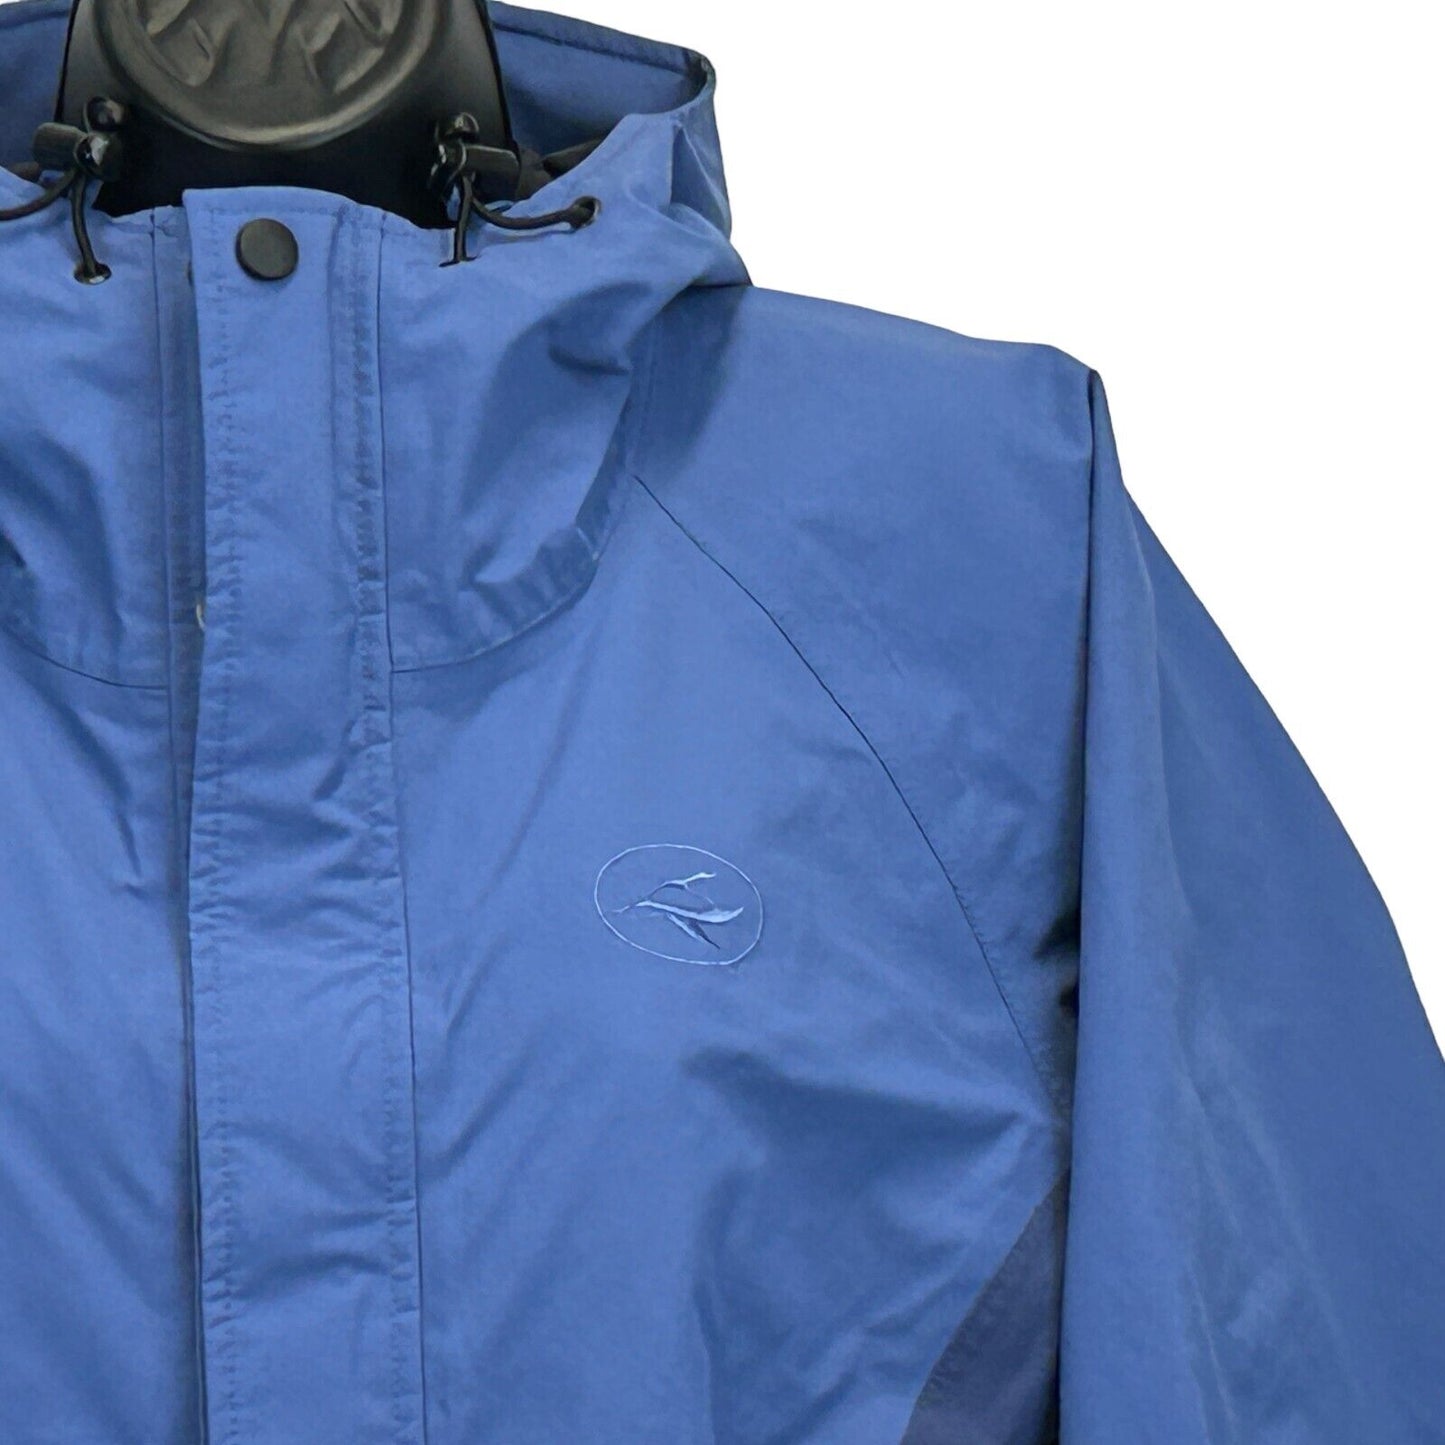 RedHead Gore-Tex Womens Raincoat Small Blue Waterproof Windbreaker Hooded Jacket